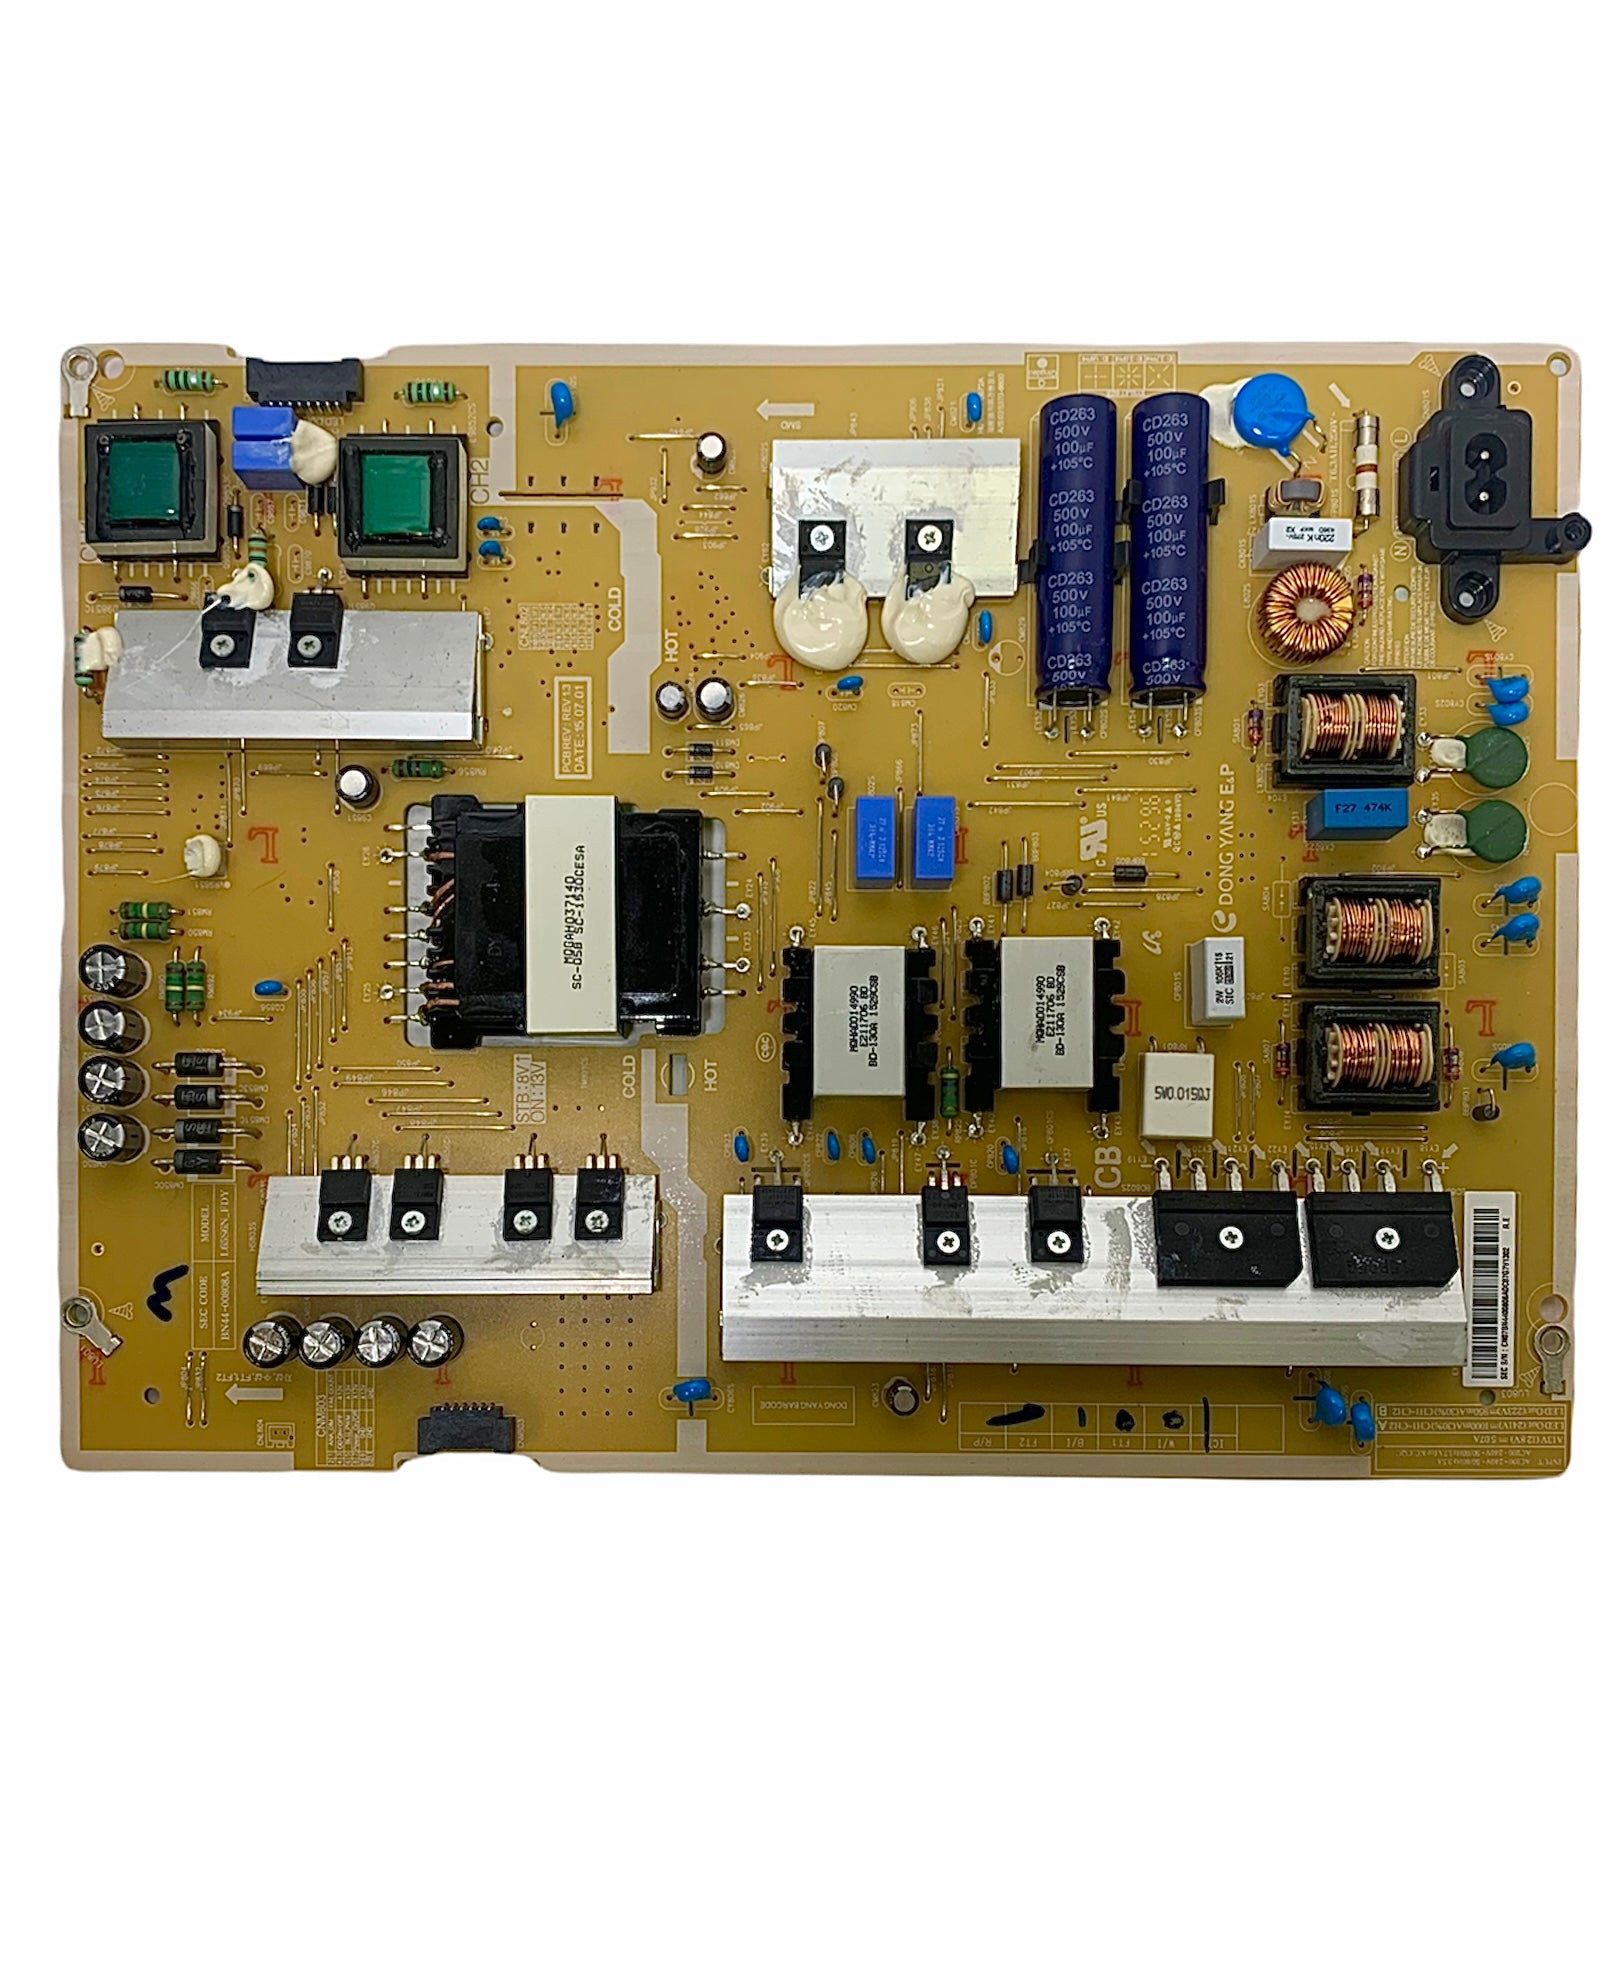 Samsung BN44-00808A / BN44-00808D Power Supply/LED Driver Board